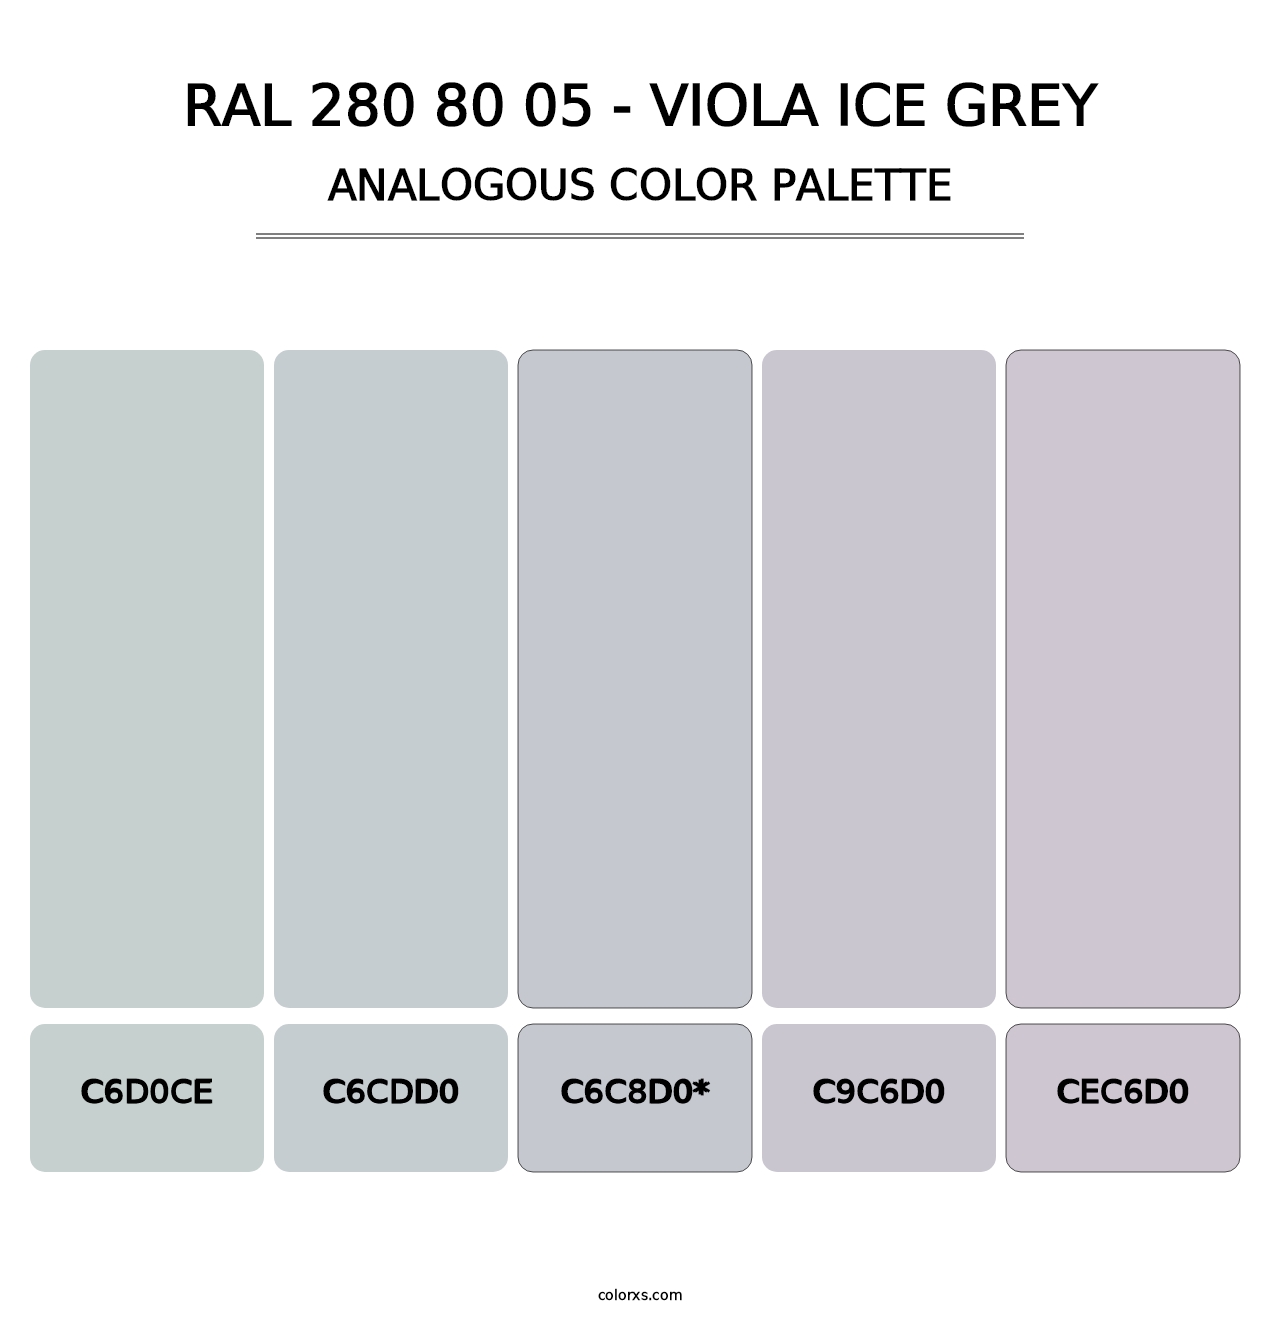 RAL 280 80 05 - Viola Ice Grey - Analogous Color Palette